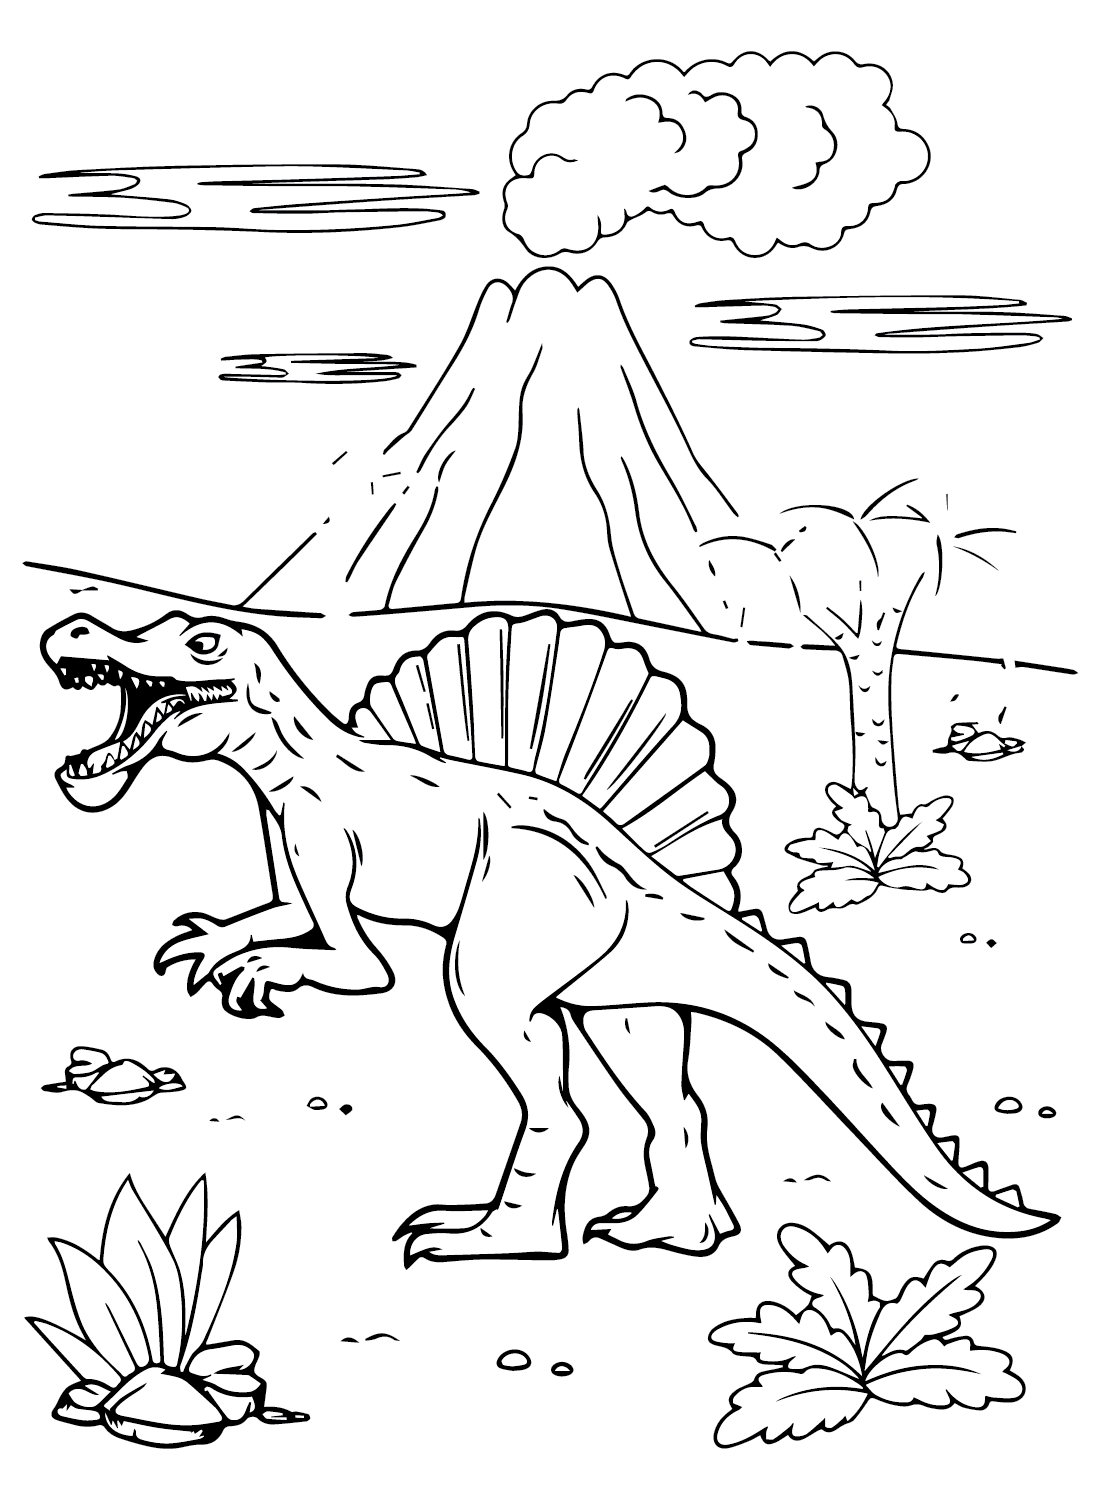 صفحات تلوين سبينوصور إيجيبتياكوس للتحميل من سبينوصور إيجيبتياكوس